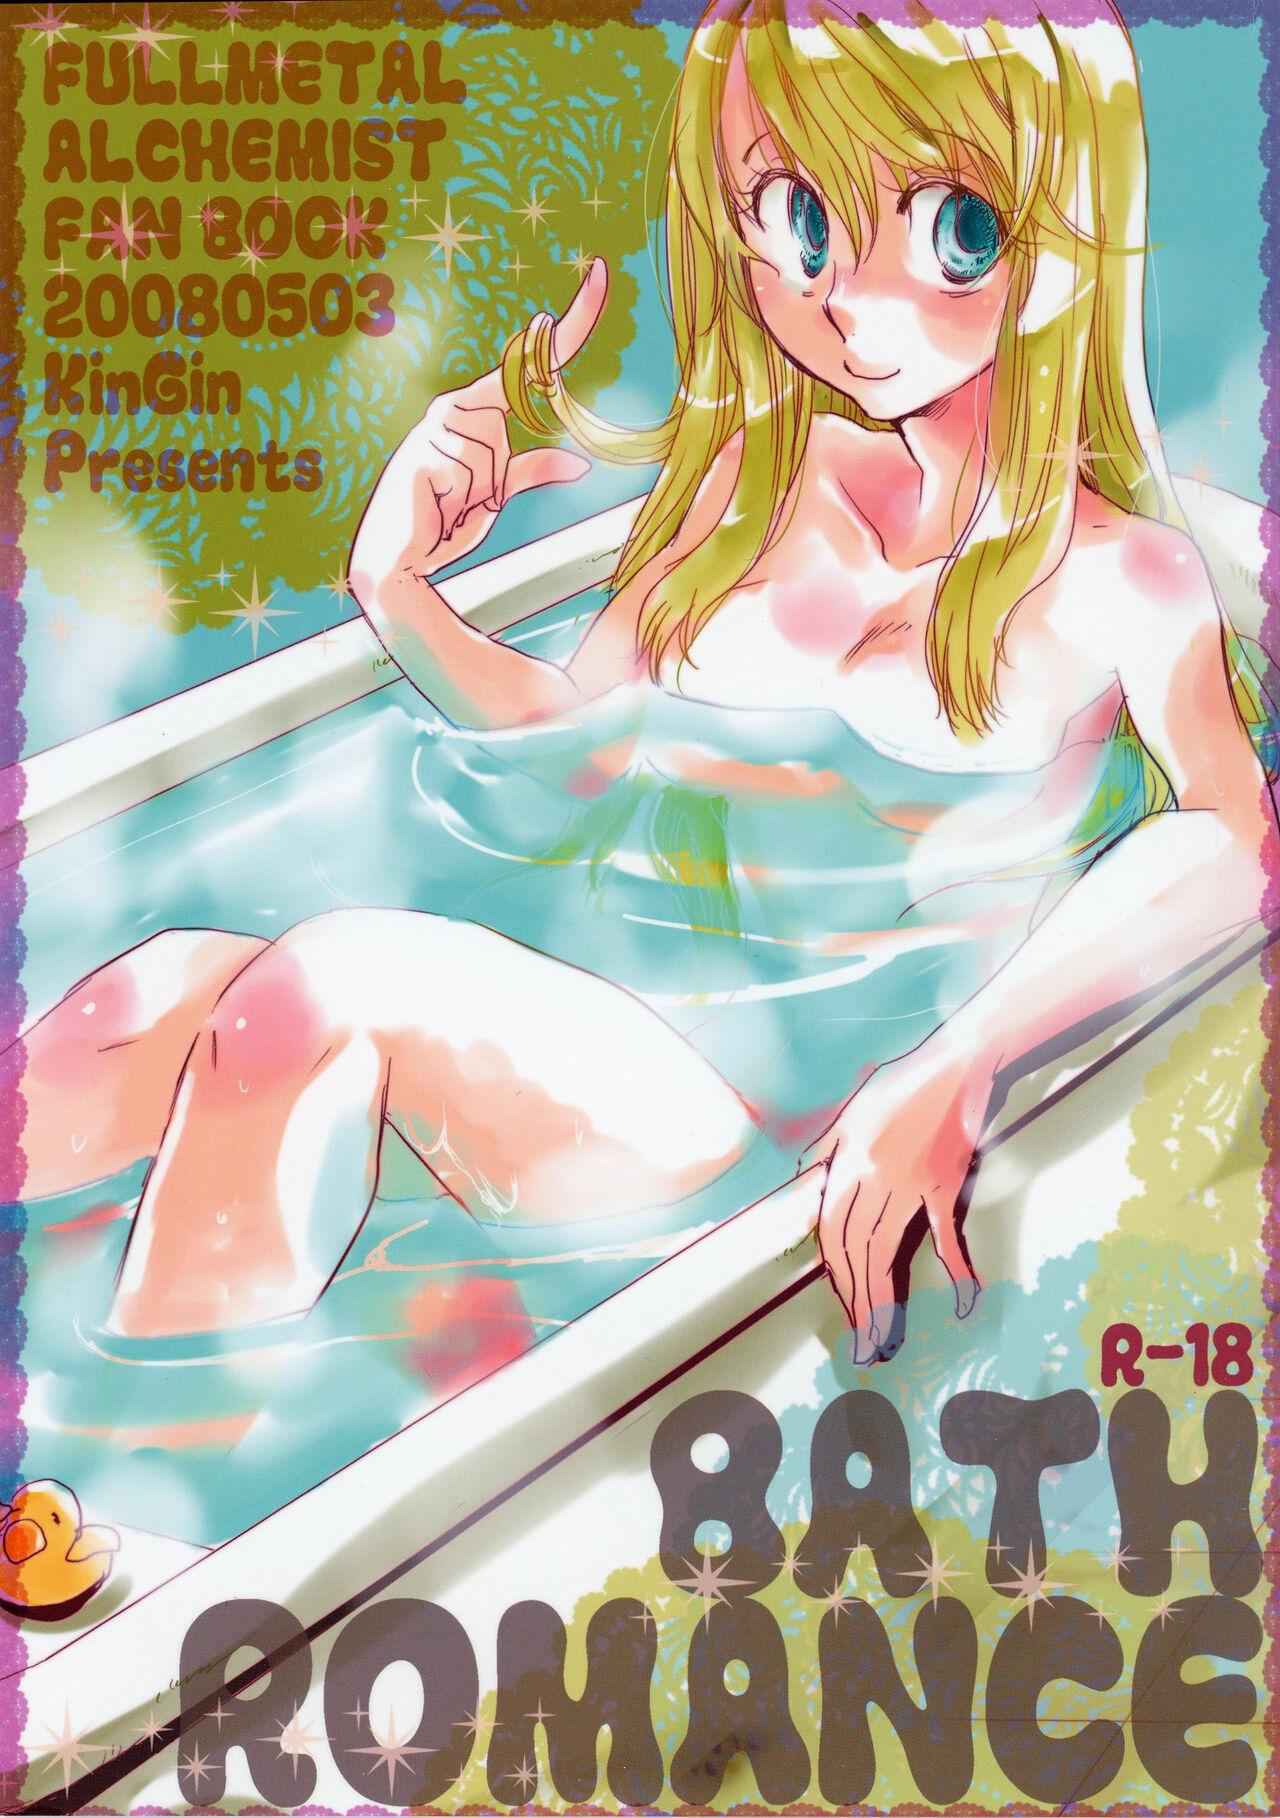 Hot Whores Bath Romance - Fullmetal alchemist | hagane no renkinjutsushi Cocksuckers - Picture 1